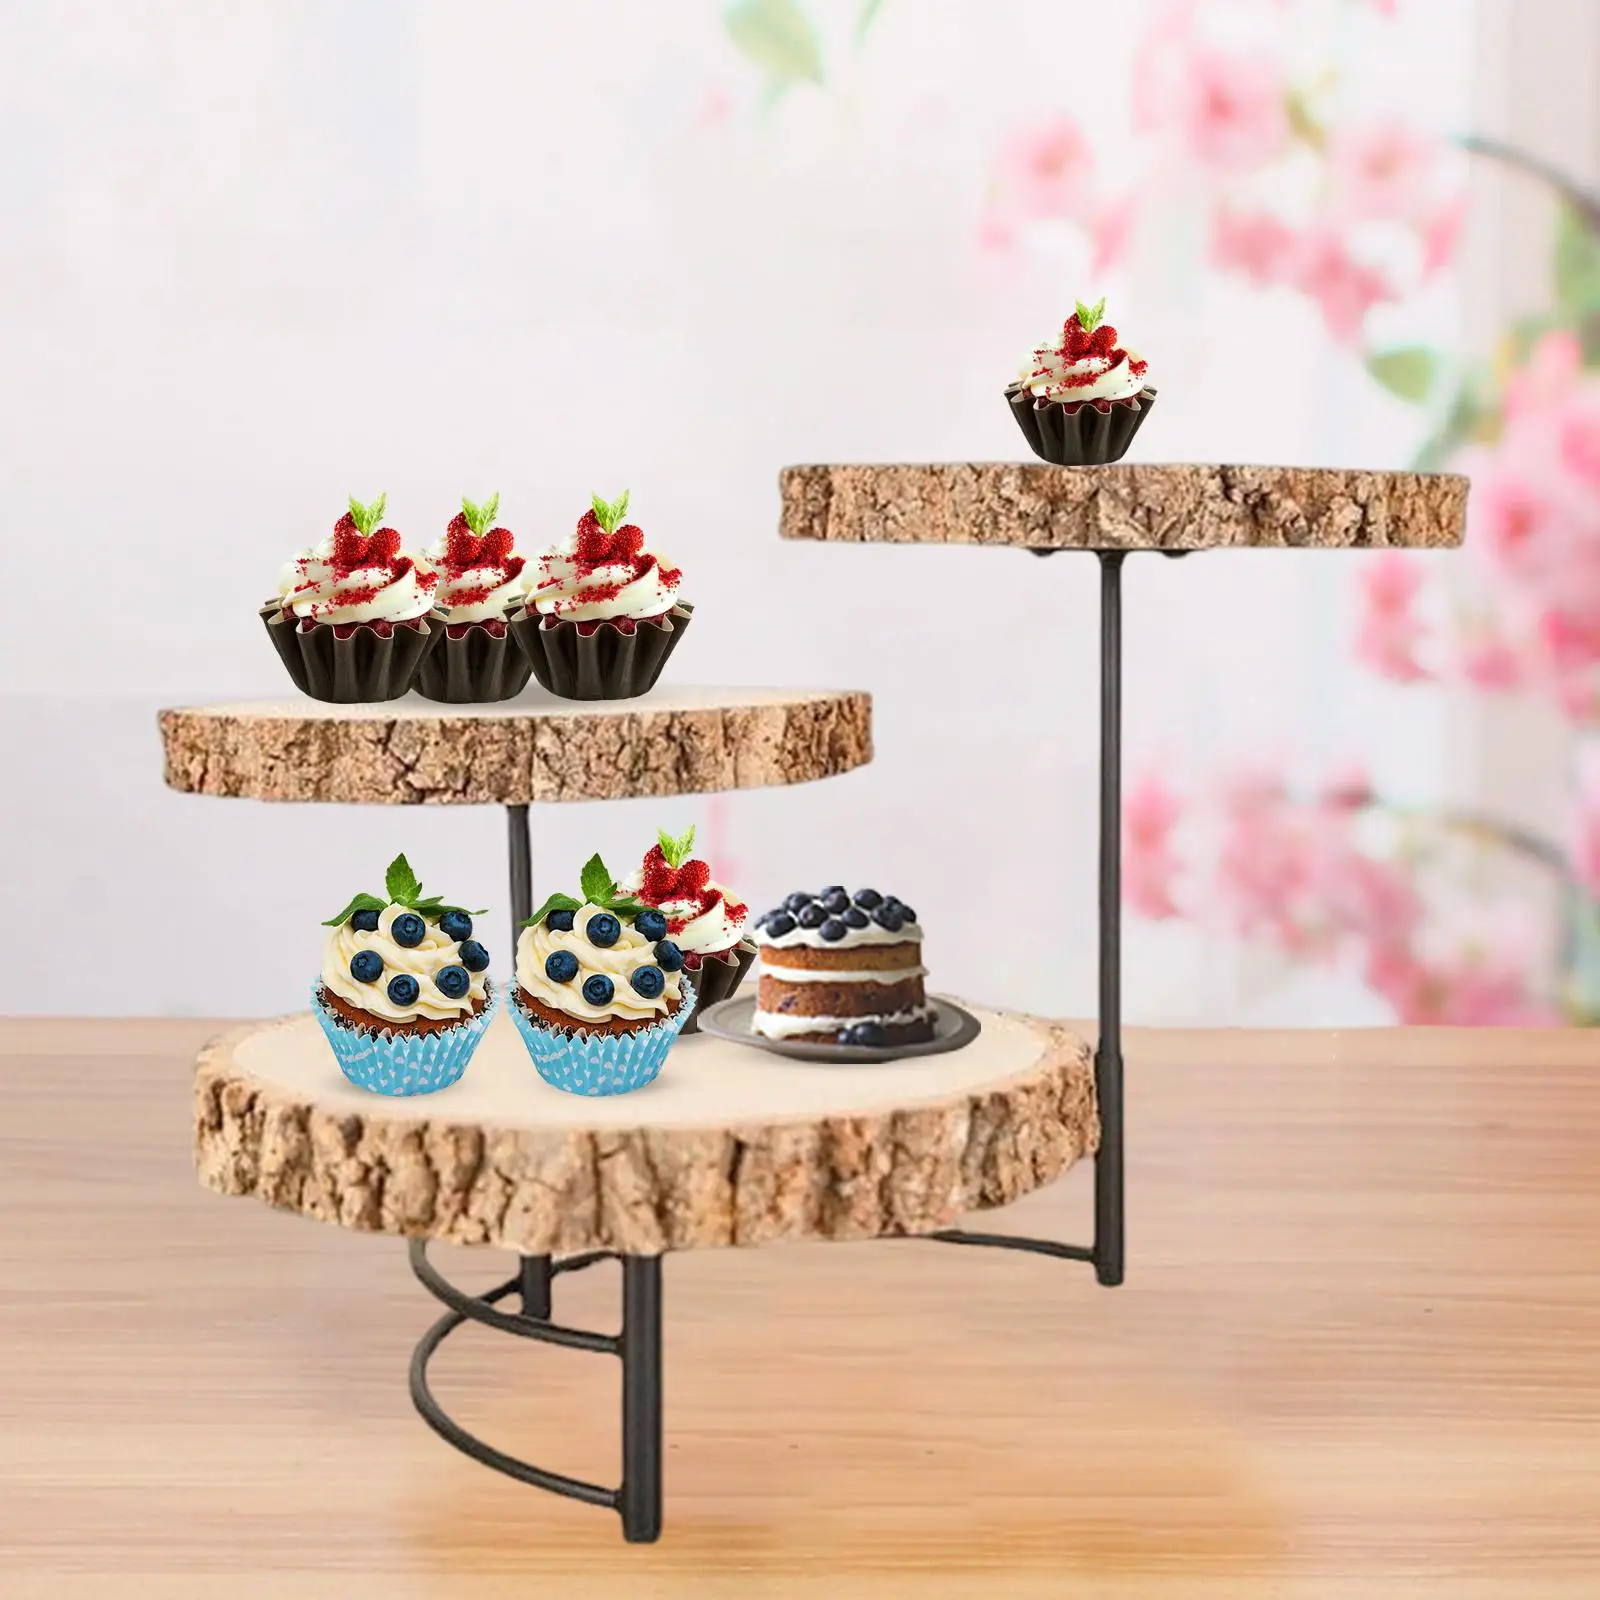 Wooden Cake Stands 3 Layer Serving Platter Dessert Display Stand Dessert